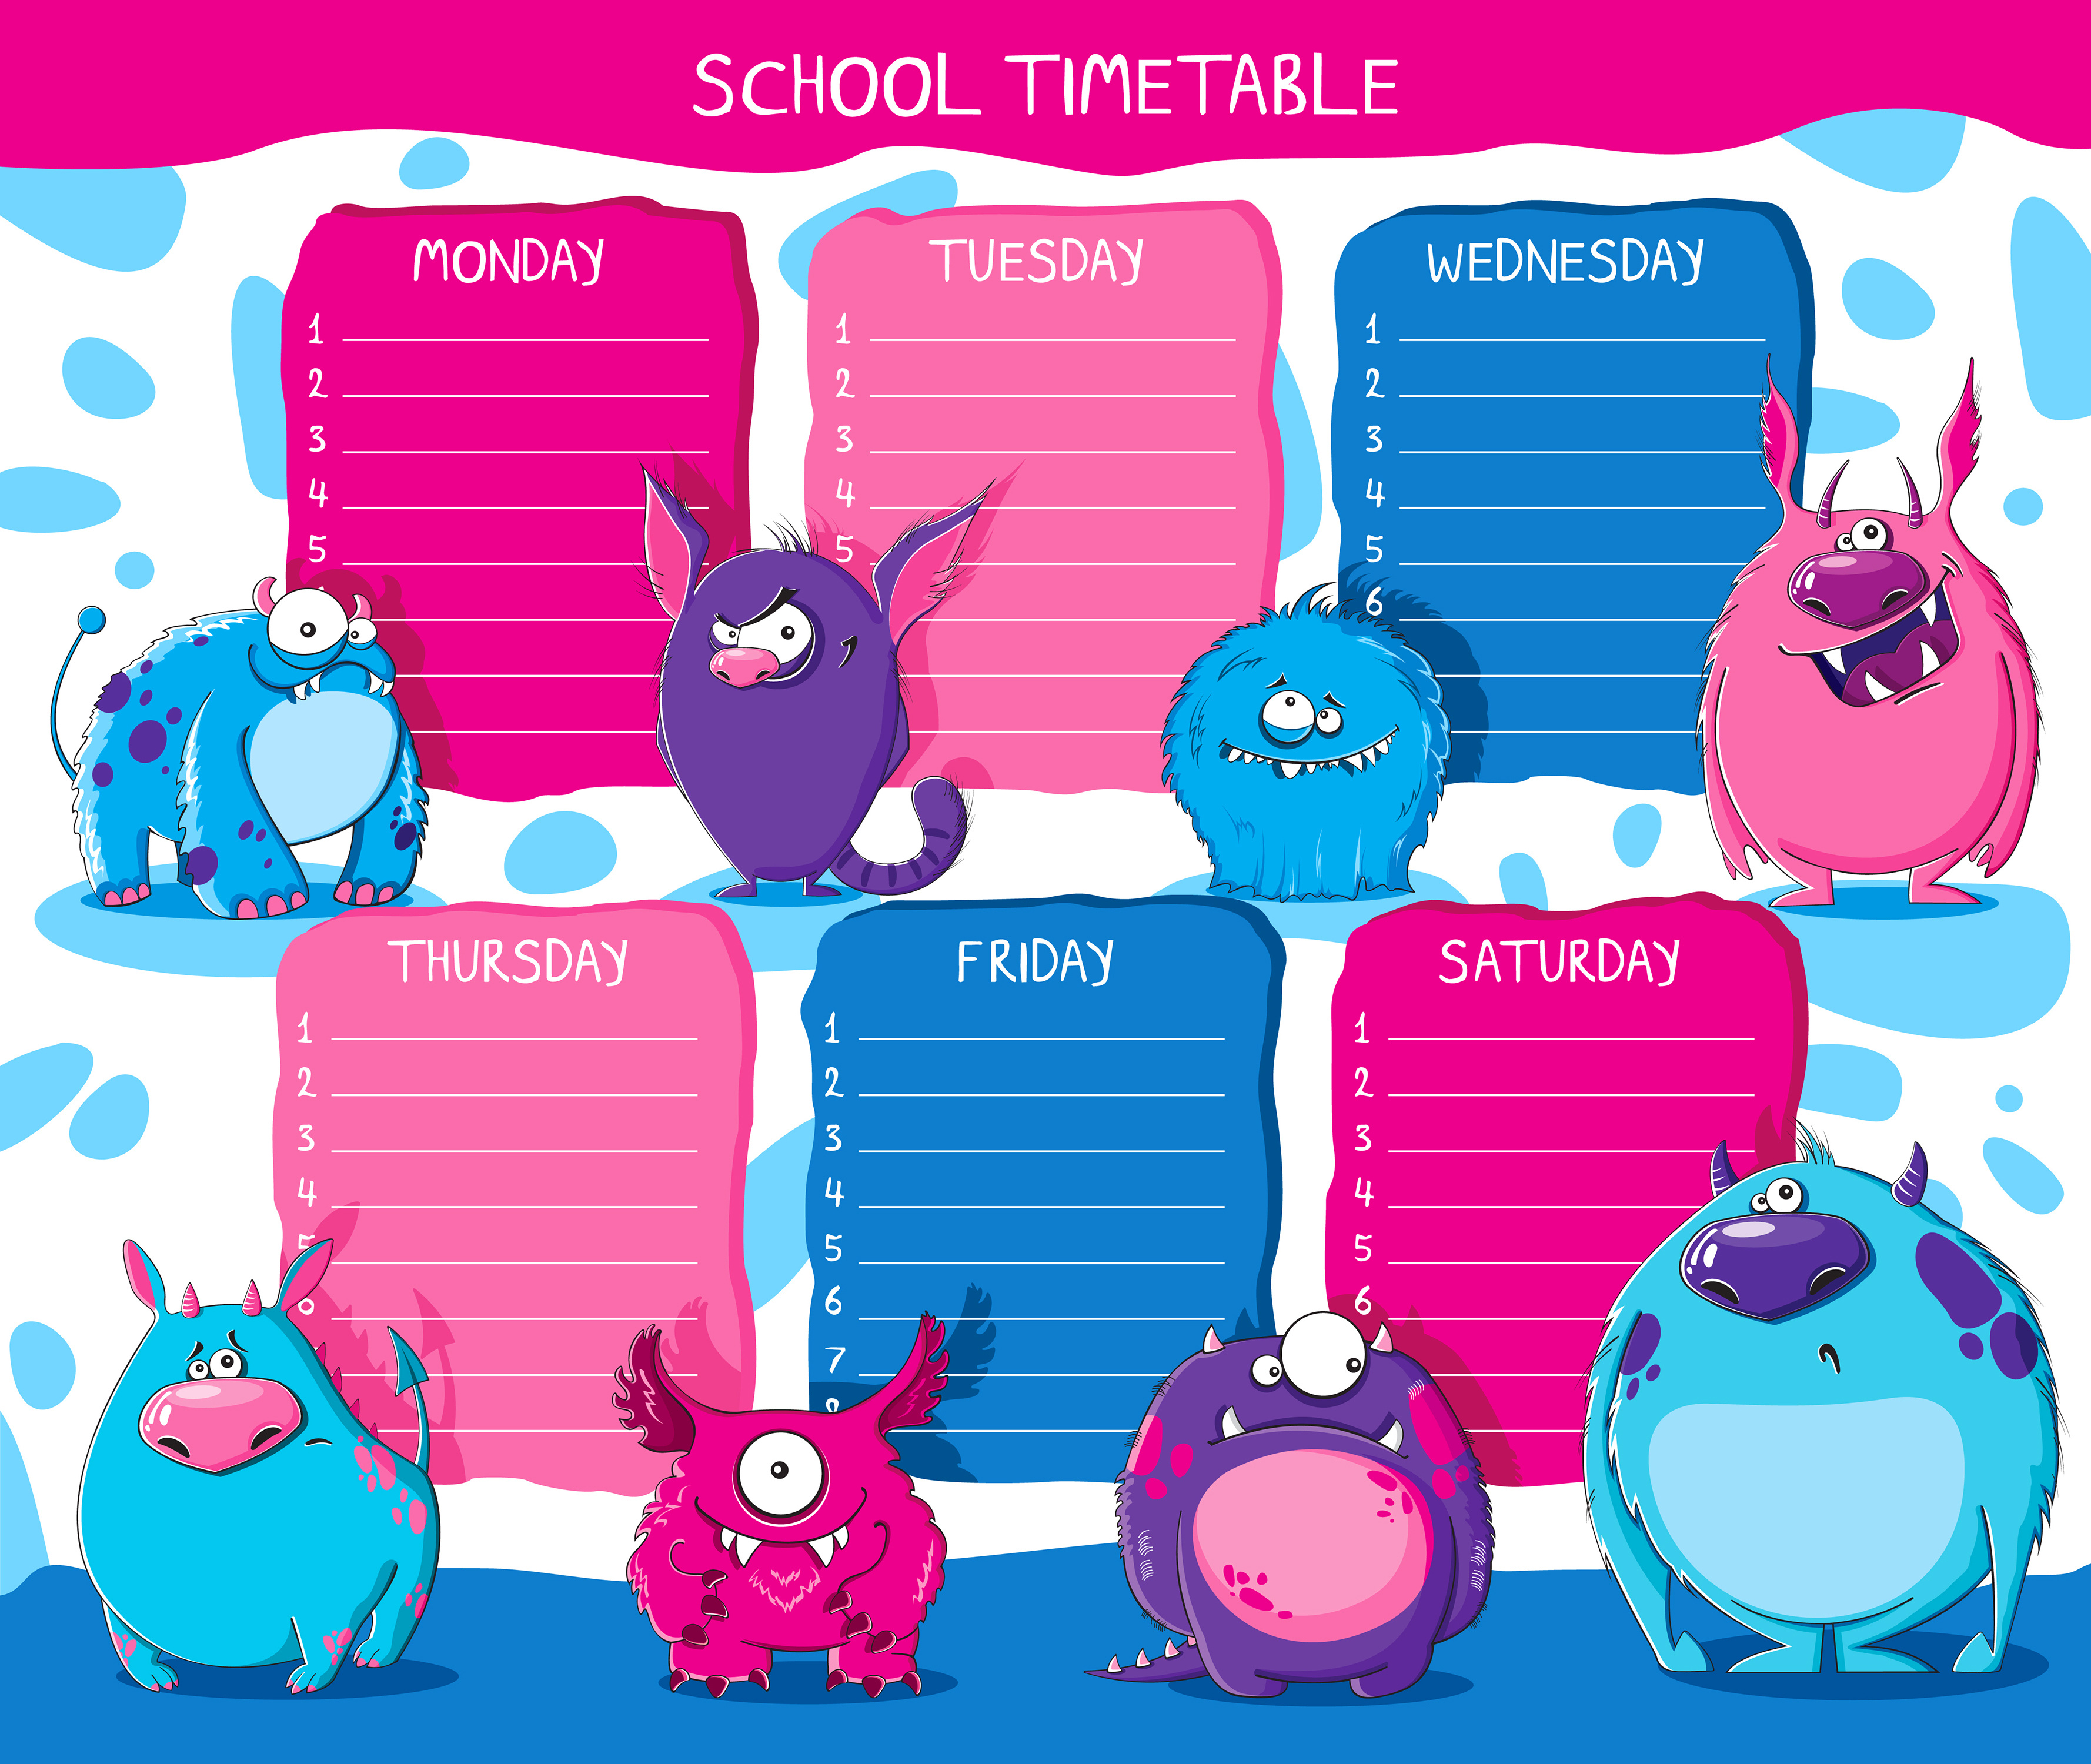 school-timetable-horarios-en-ingles5